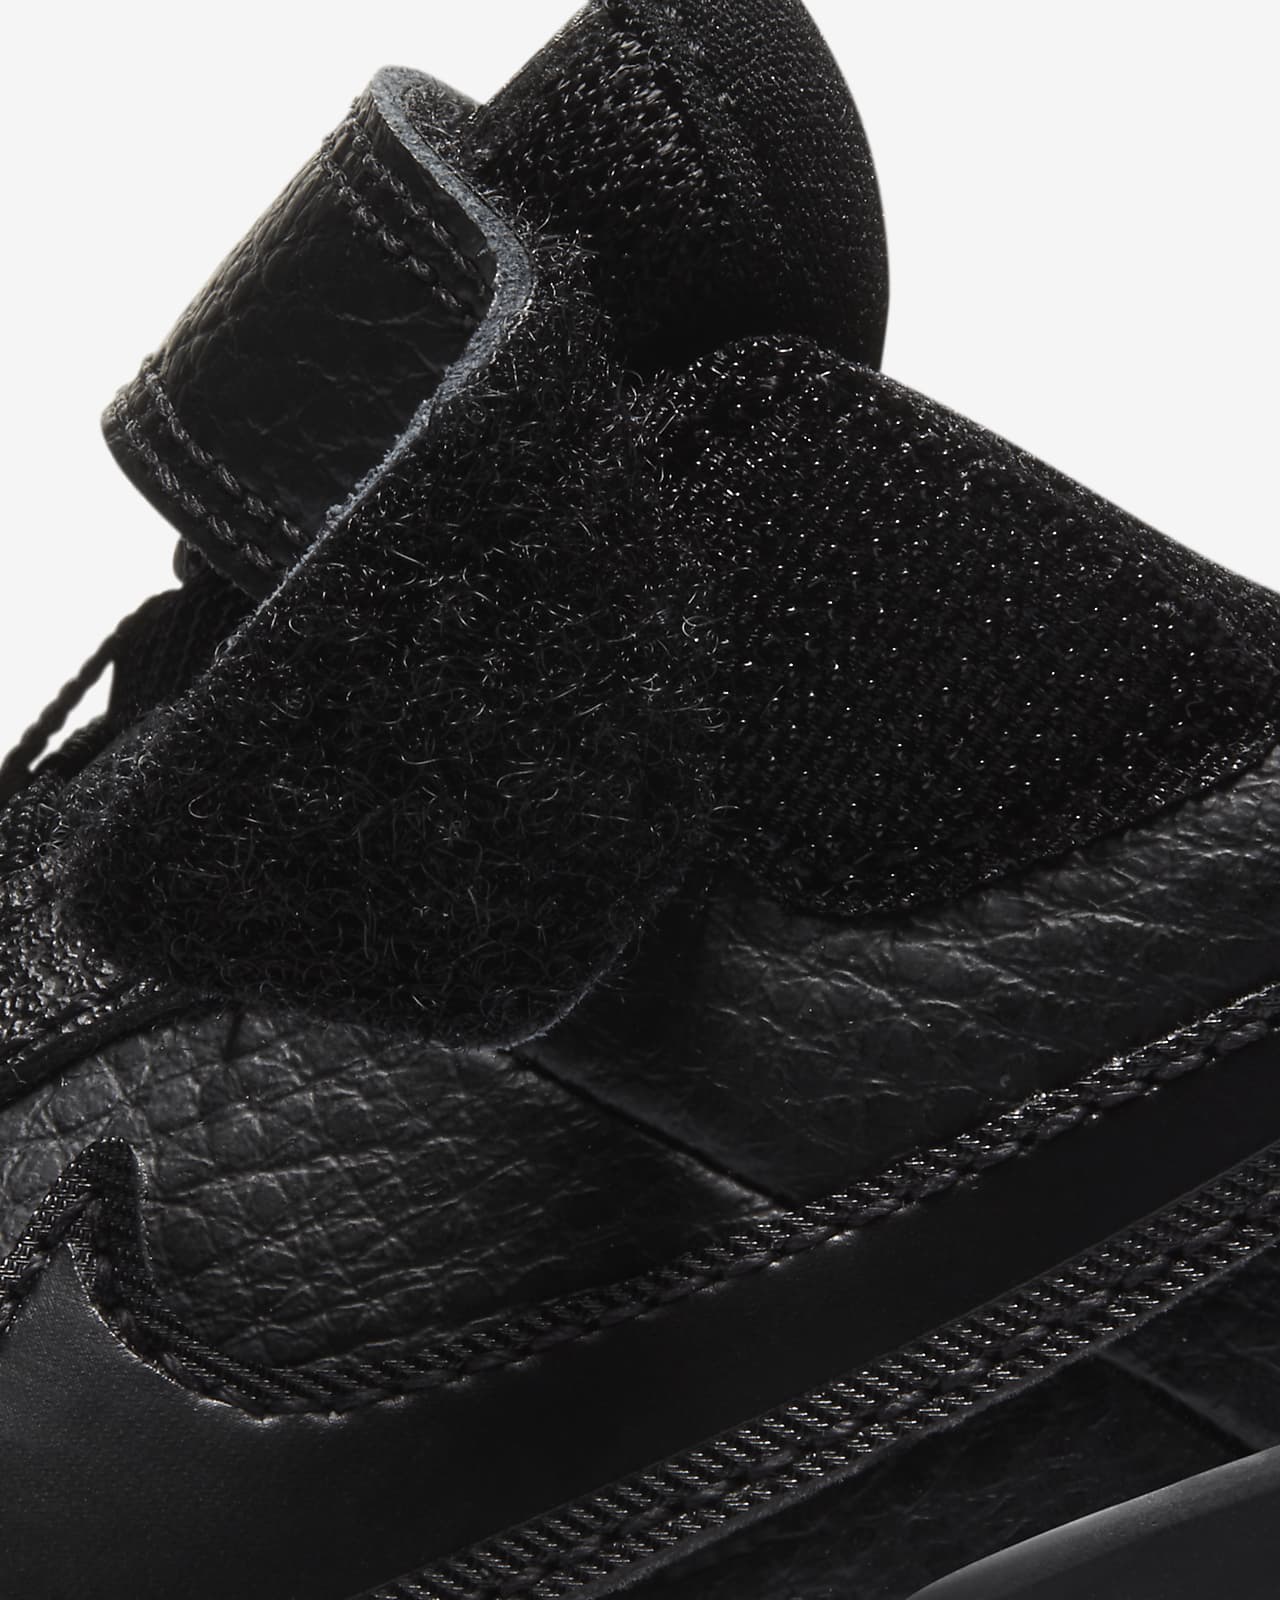 black leather nike shoes